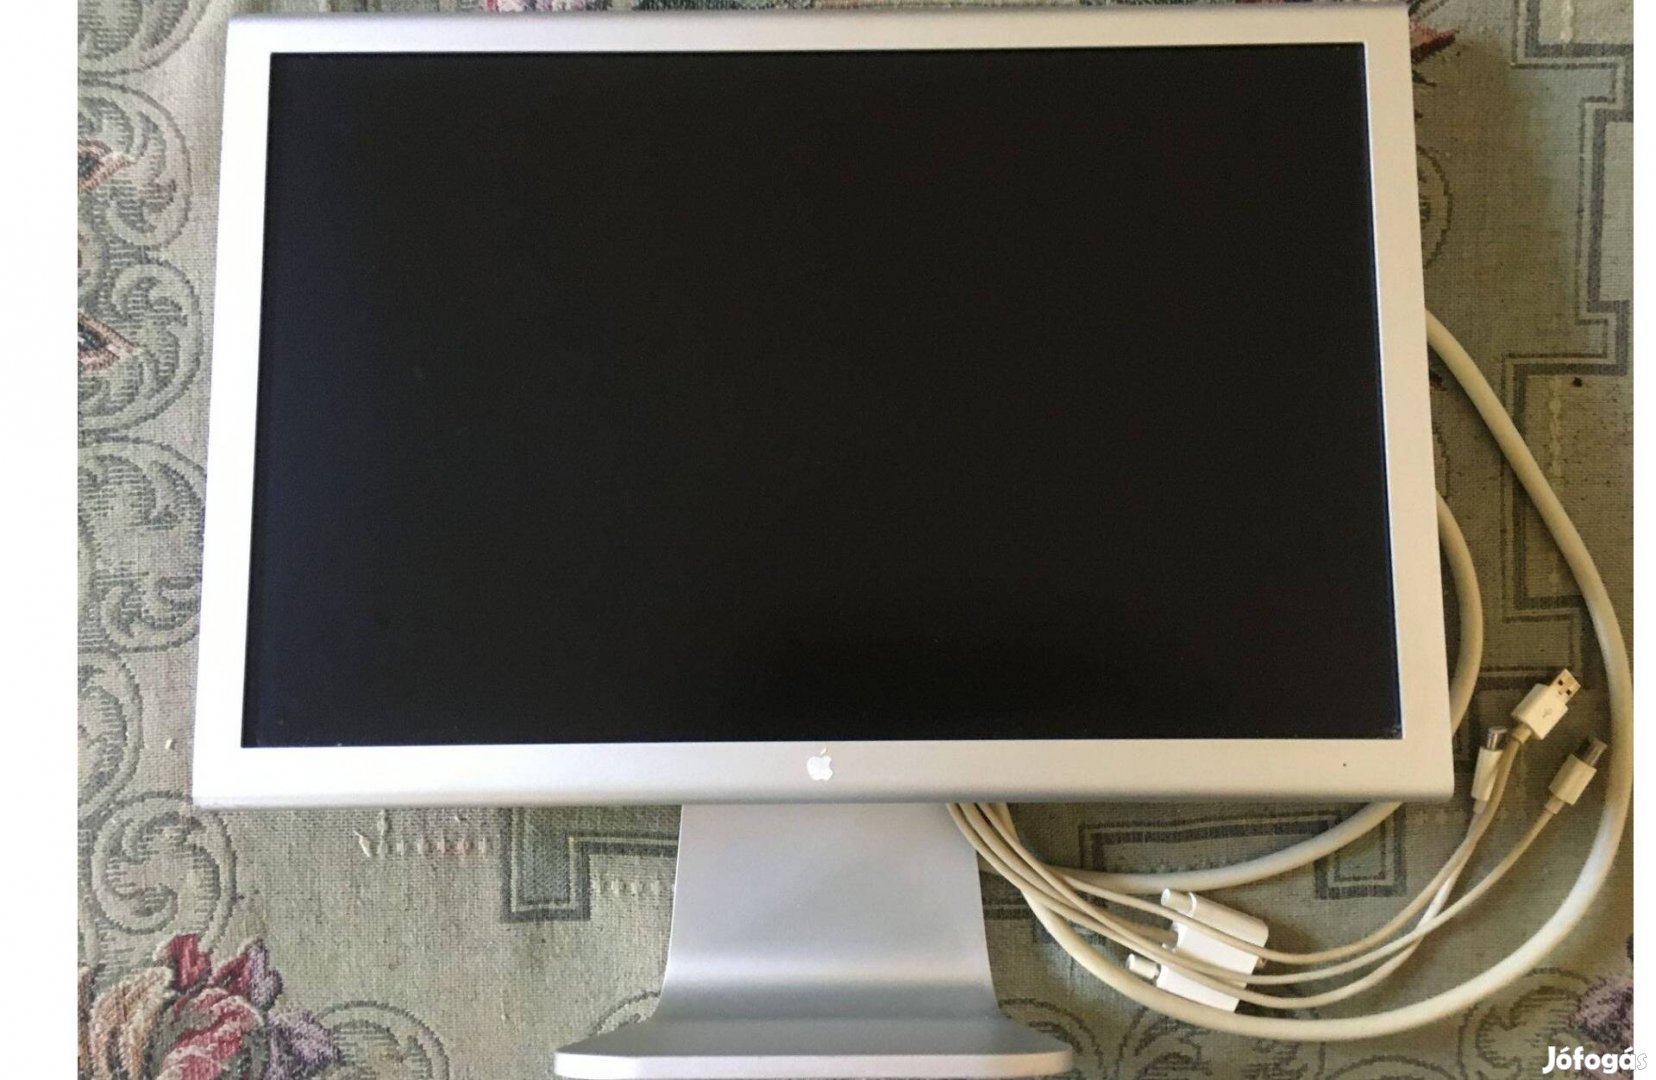 Apple Cinema Display A1081 (Aluminium) monitor